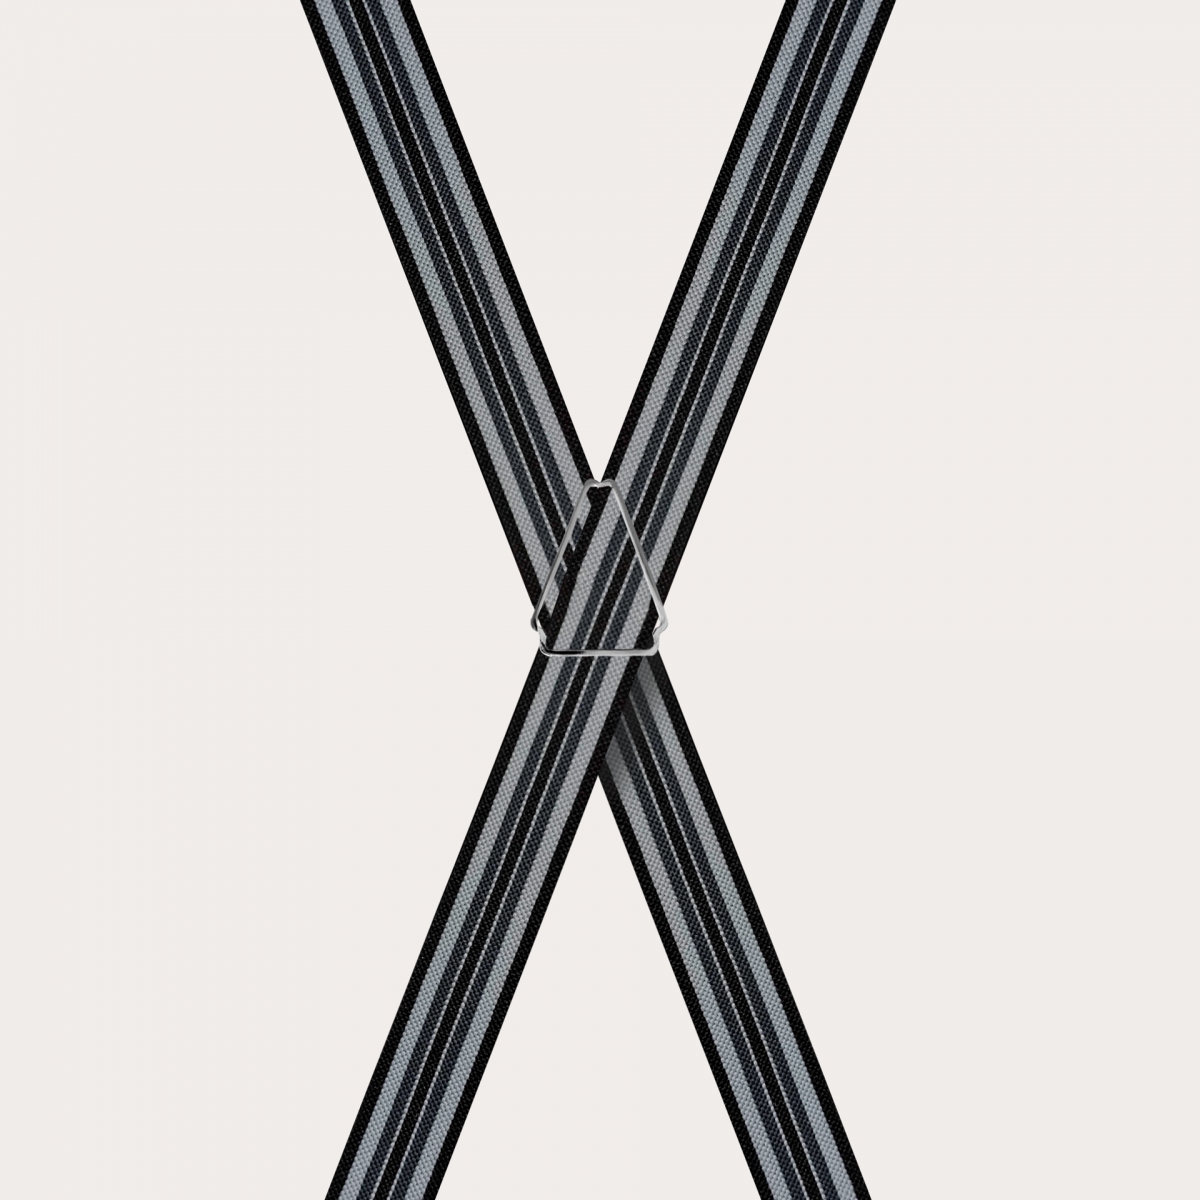 BRUCLE Stylish striped X-shaped braces, black and grey tones